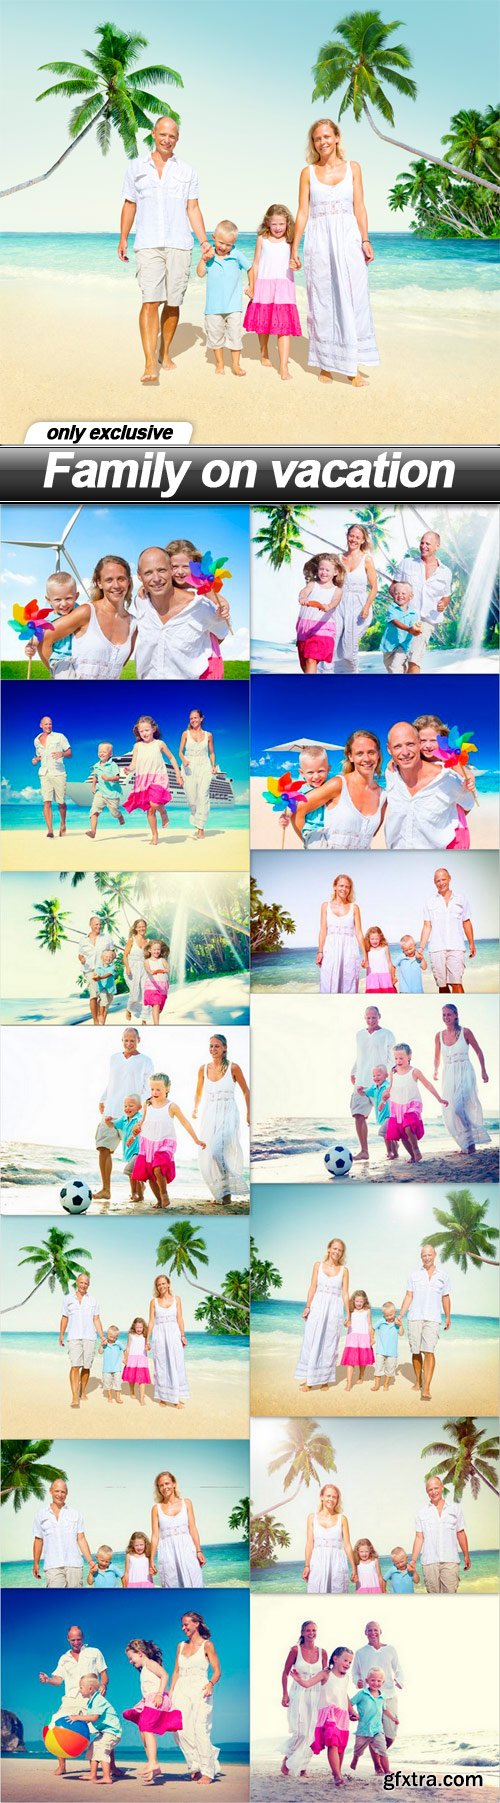 Family on vacation - 14 UHQ JPEG